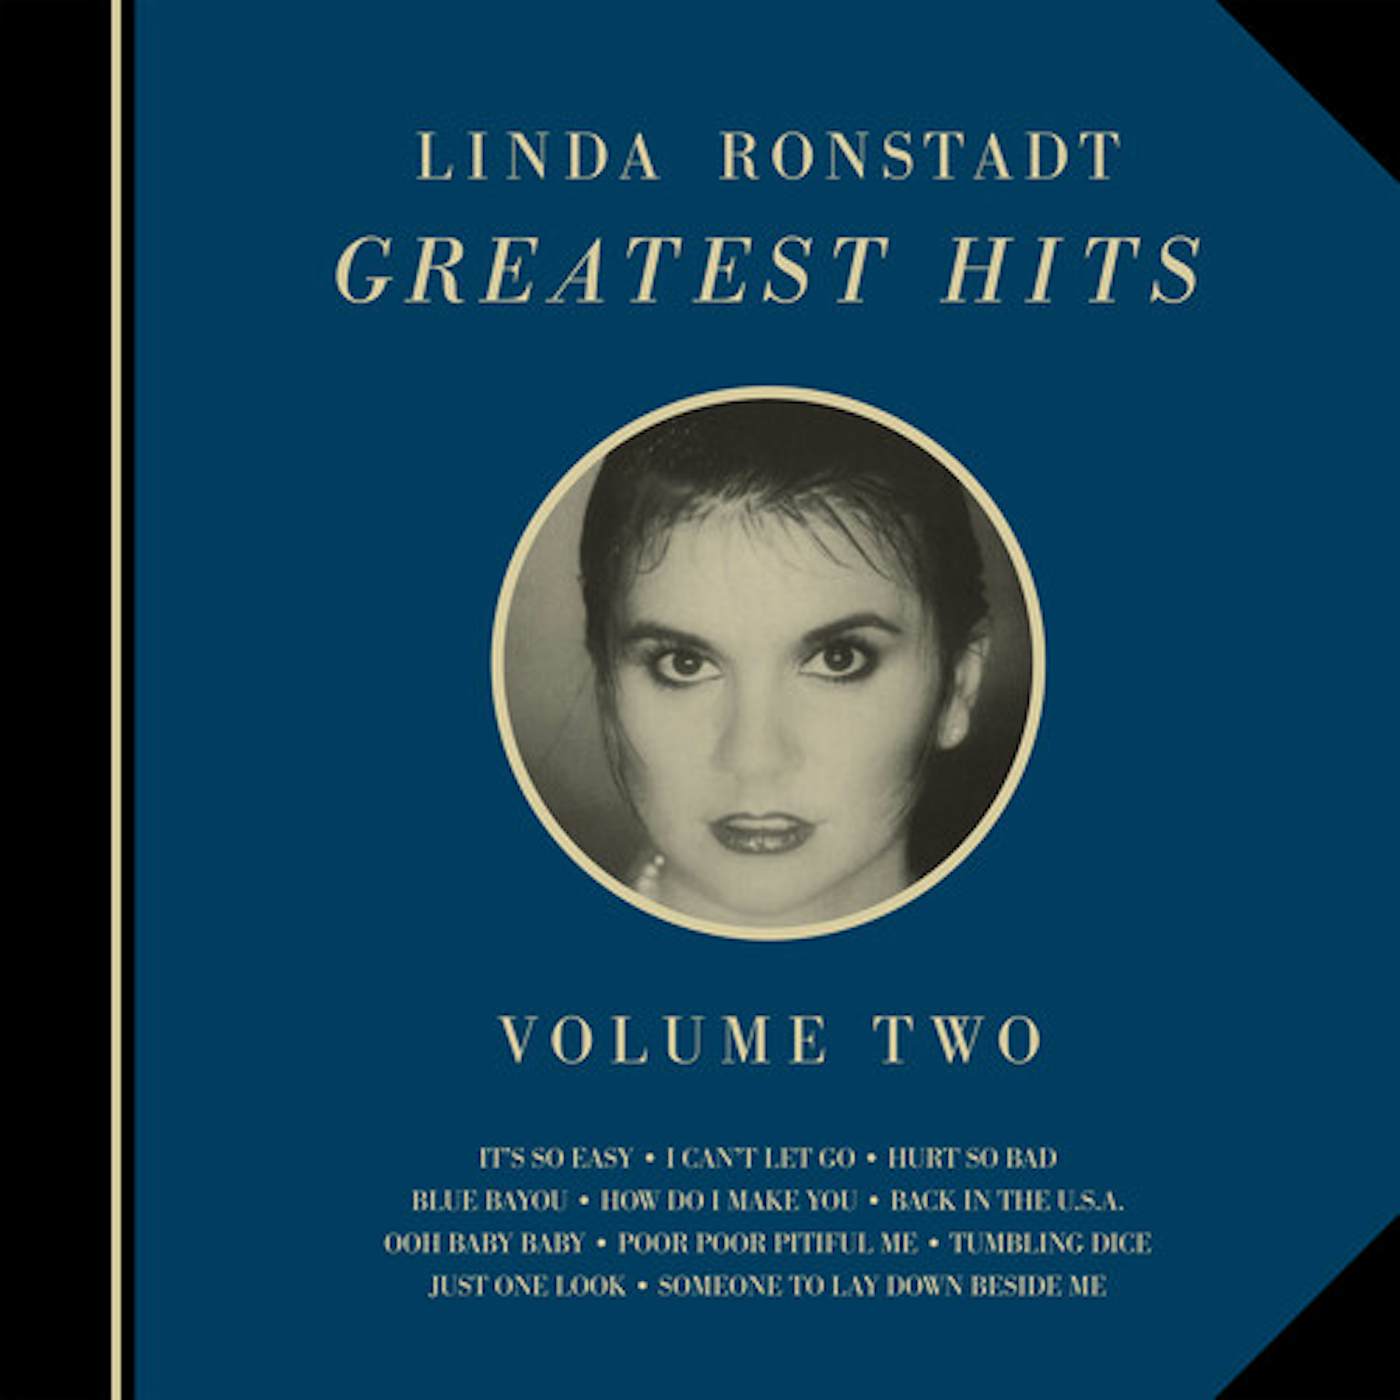 Linda Ronstadt Greatest Hits Volume Two Vinyl Record